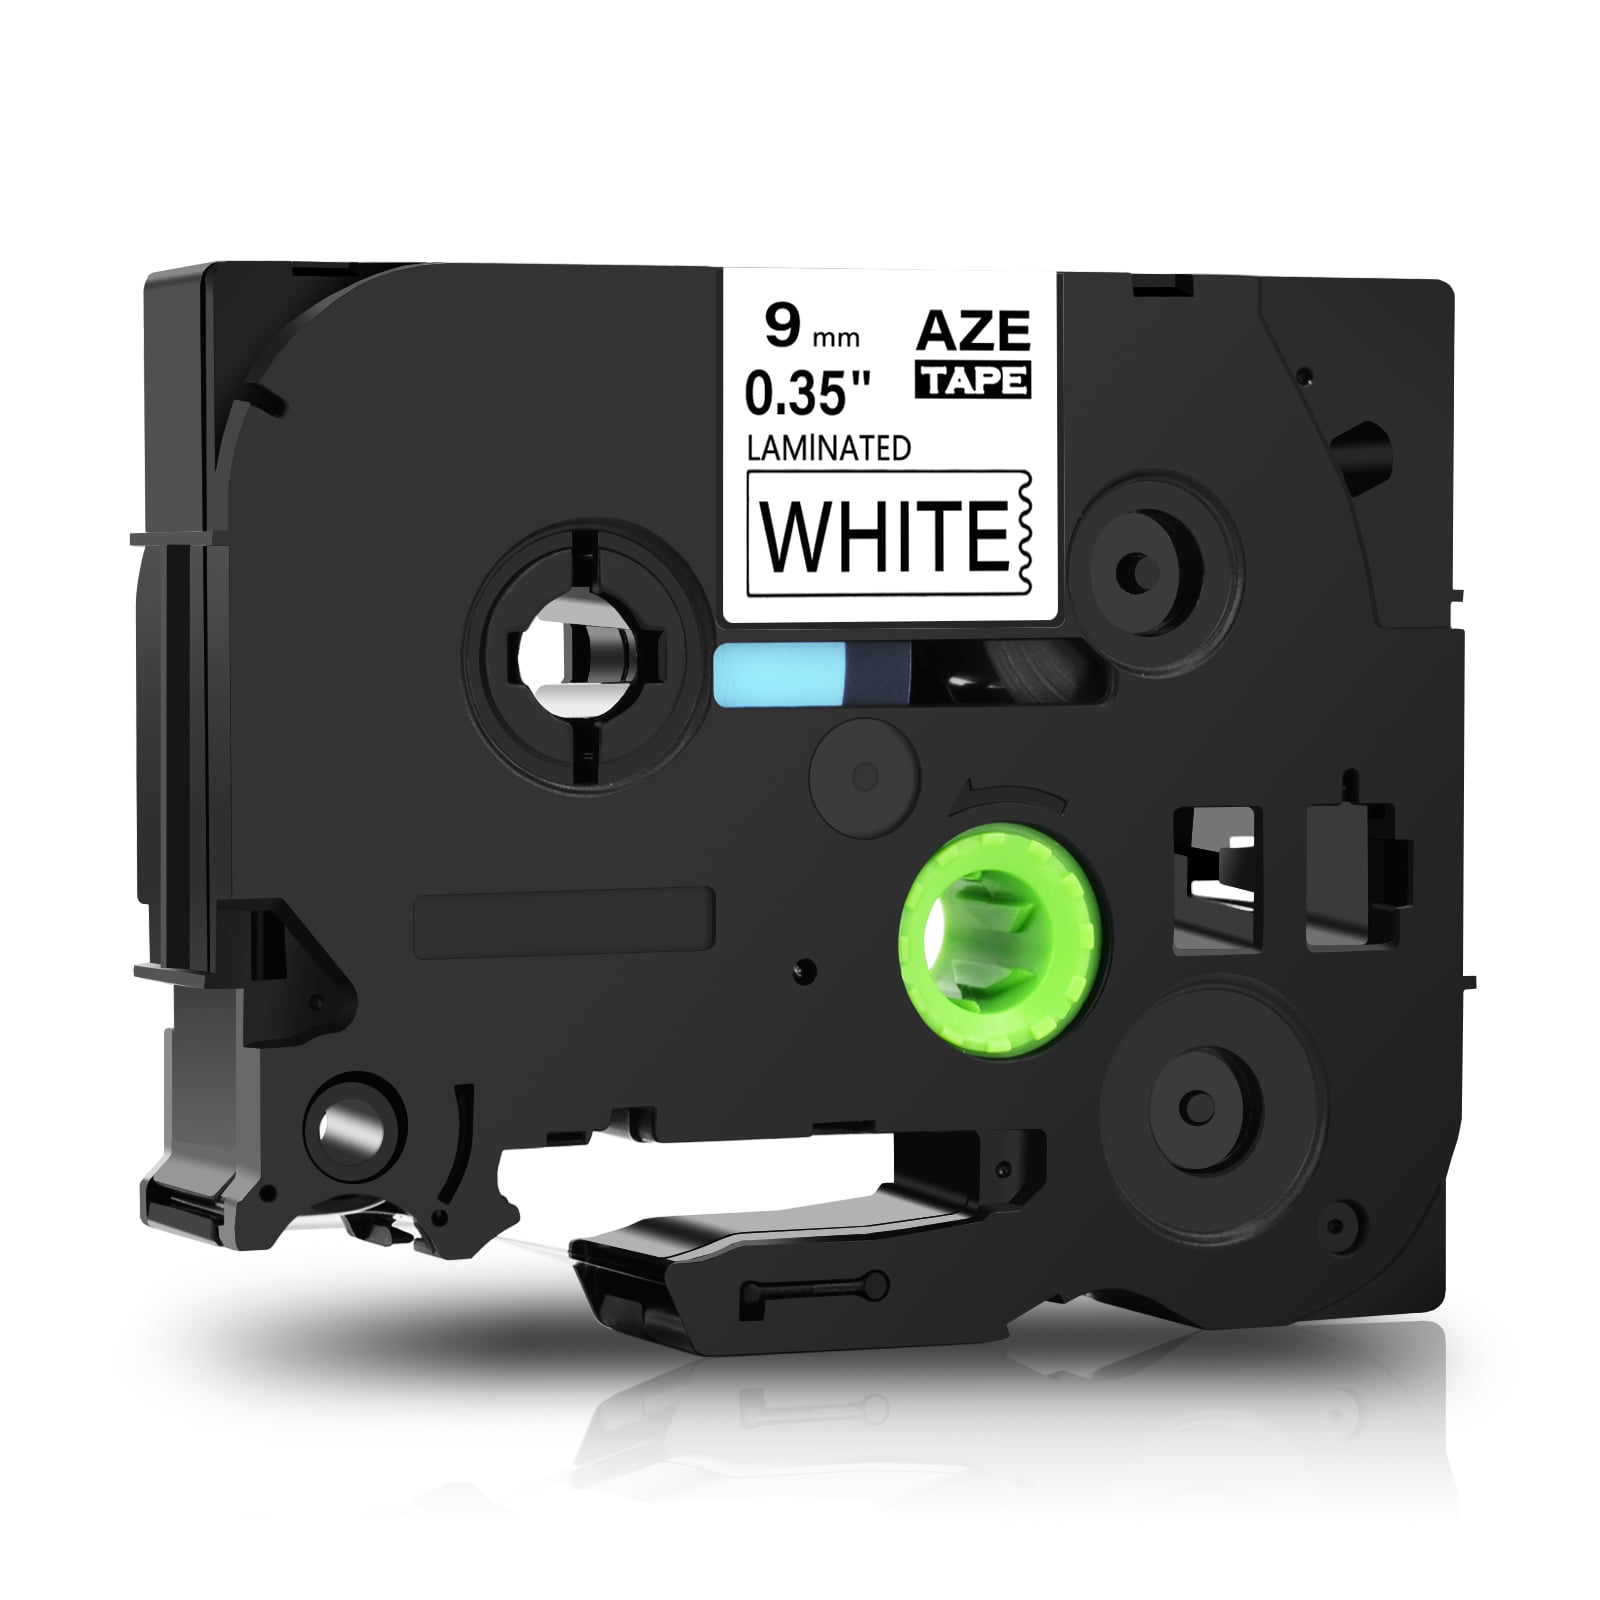 4PK TZ-221 TZe-221 for Brother PT-D400AD PT-D200G Black on White Label Tape 9mm 